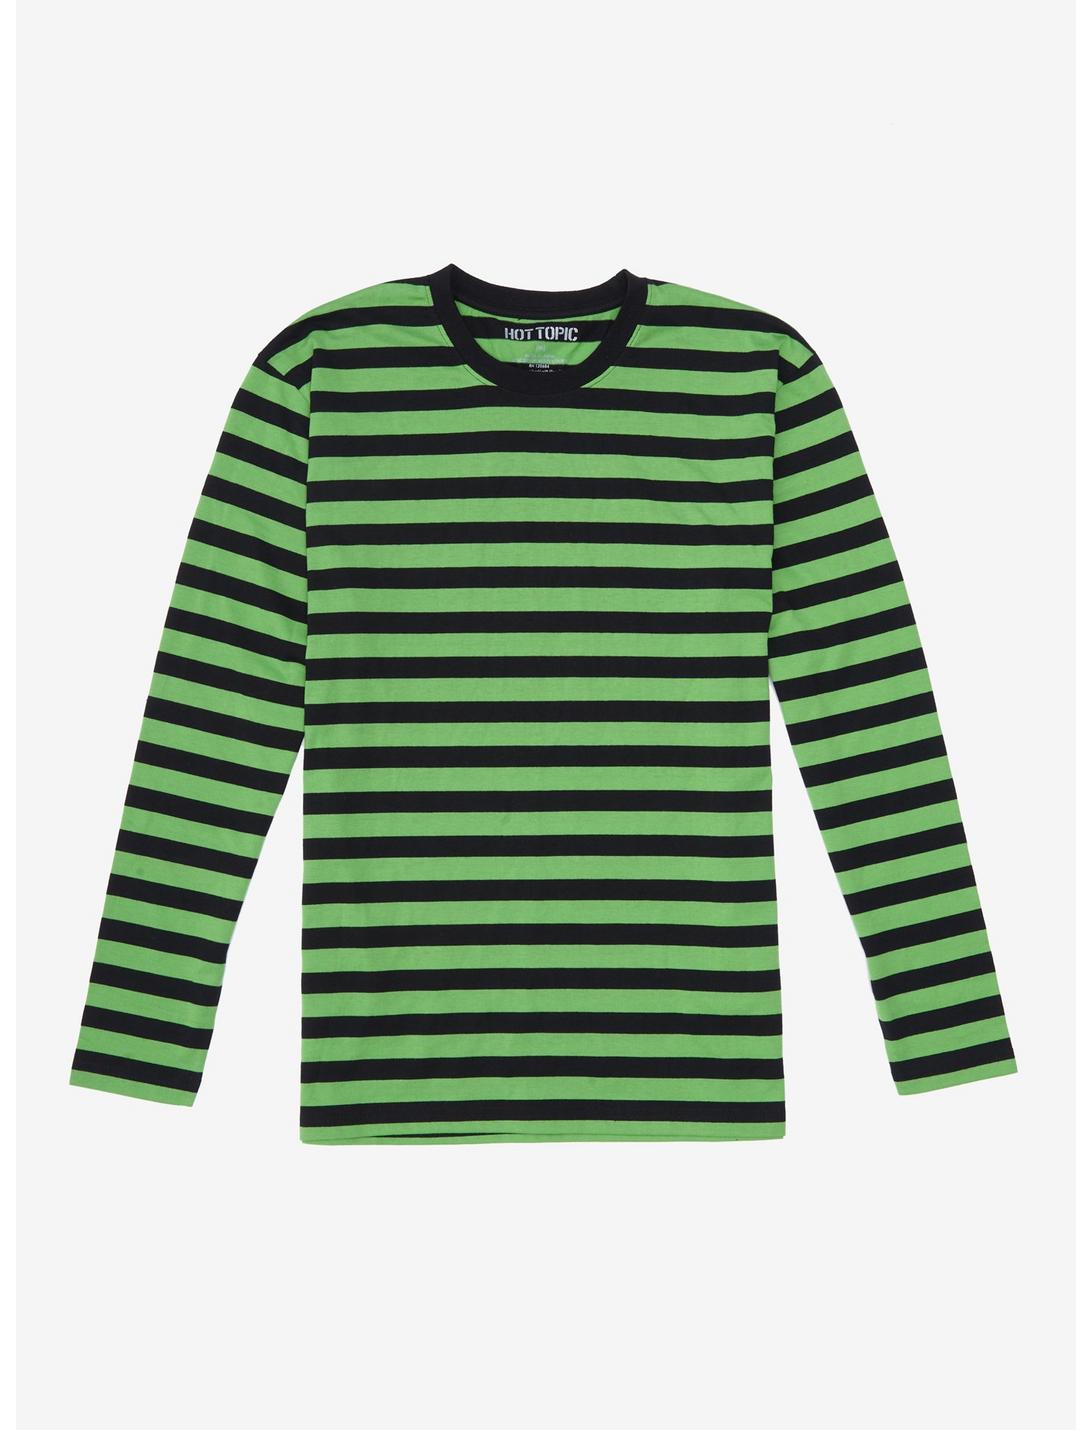 Green & Black Stripe Long-Sleeve T-Shirt, STRIPE - GREEN, hi-res